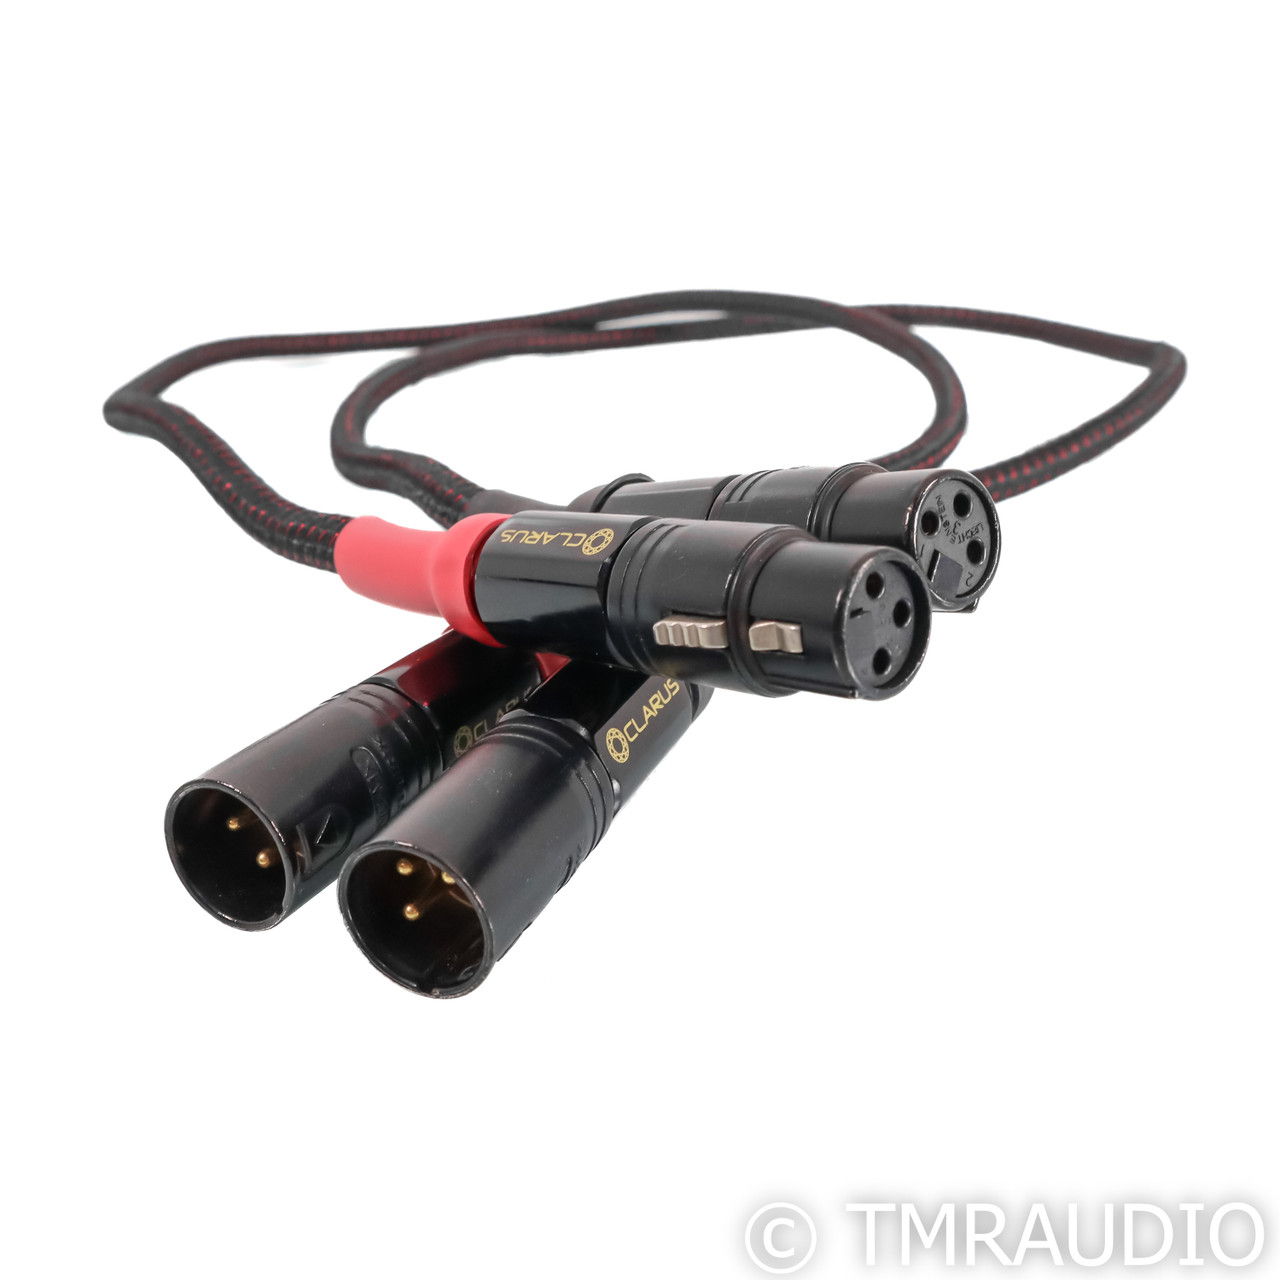 Clarus Cable Crimson XLR Cables; 1m Pair Balanced Inter...